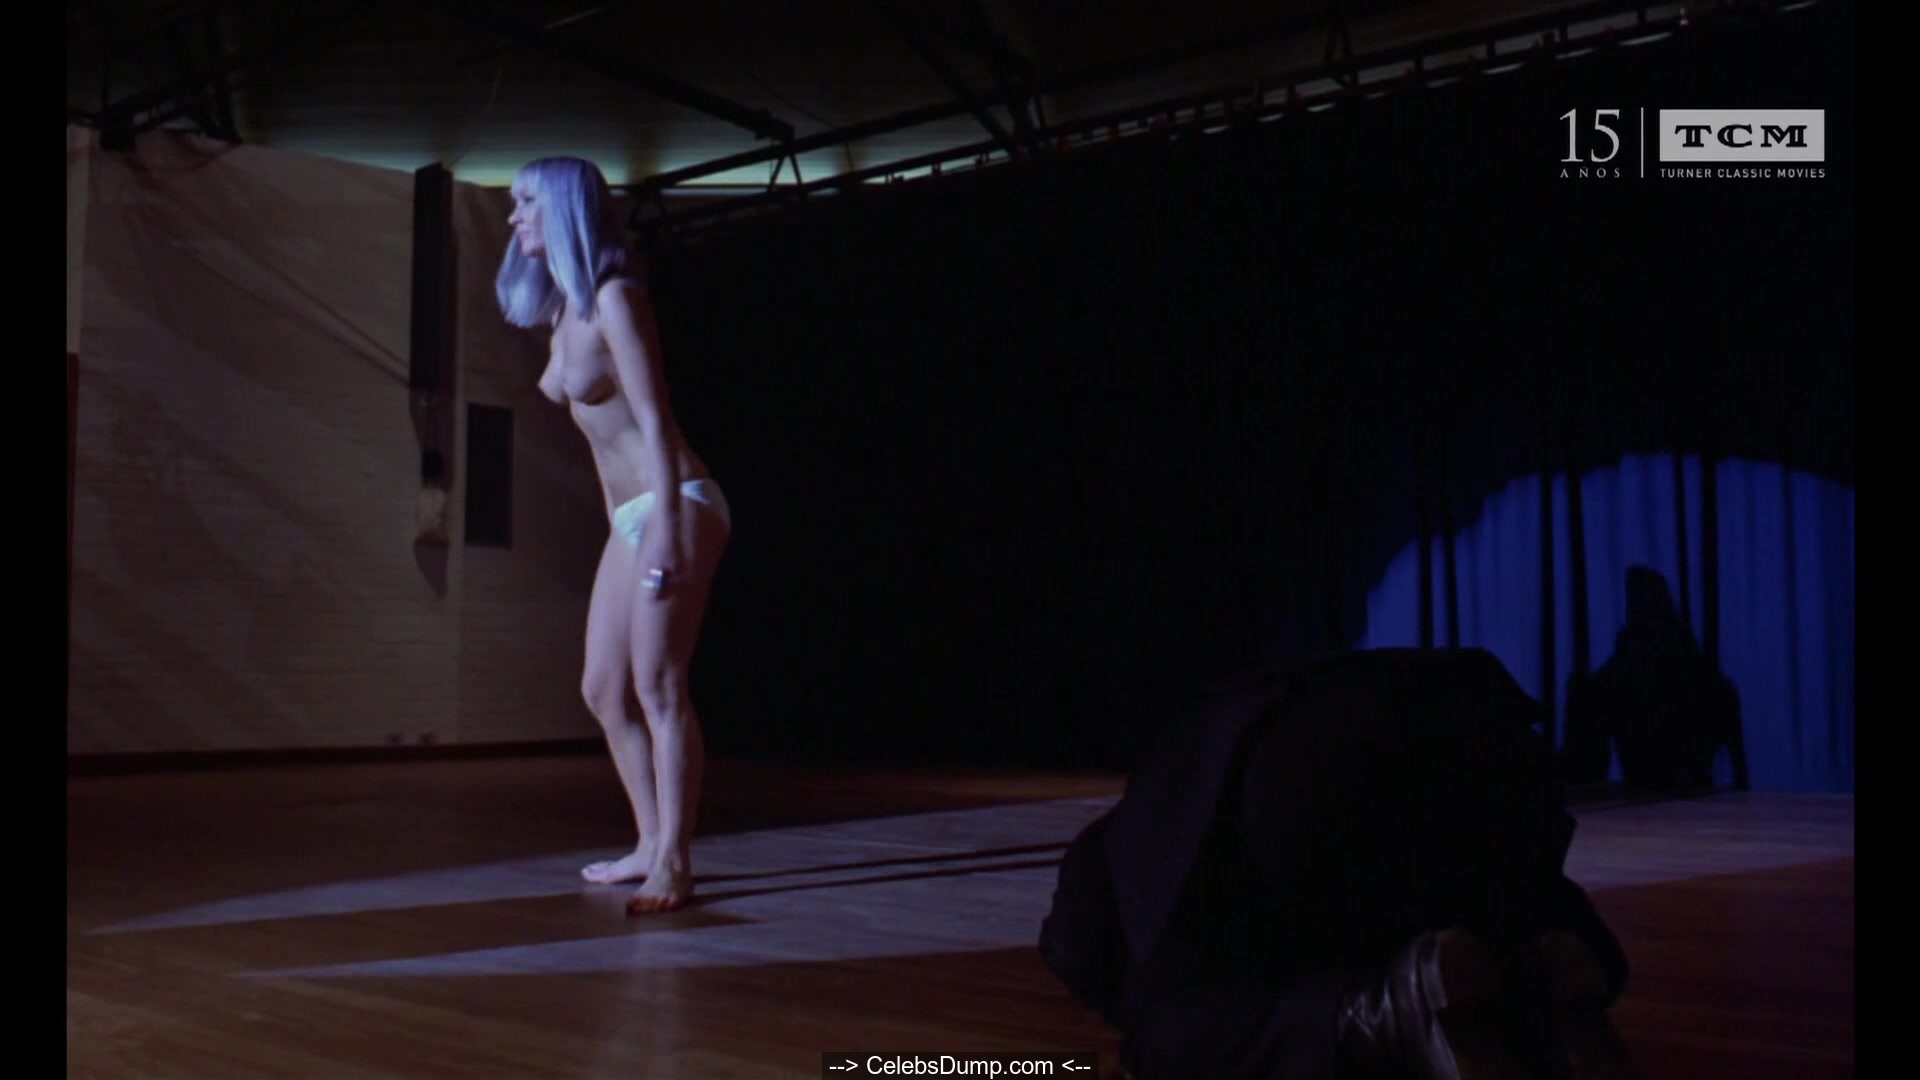 Virginia Wetherell nude boobs in A Clockwork Orange (1971) .